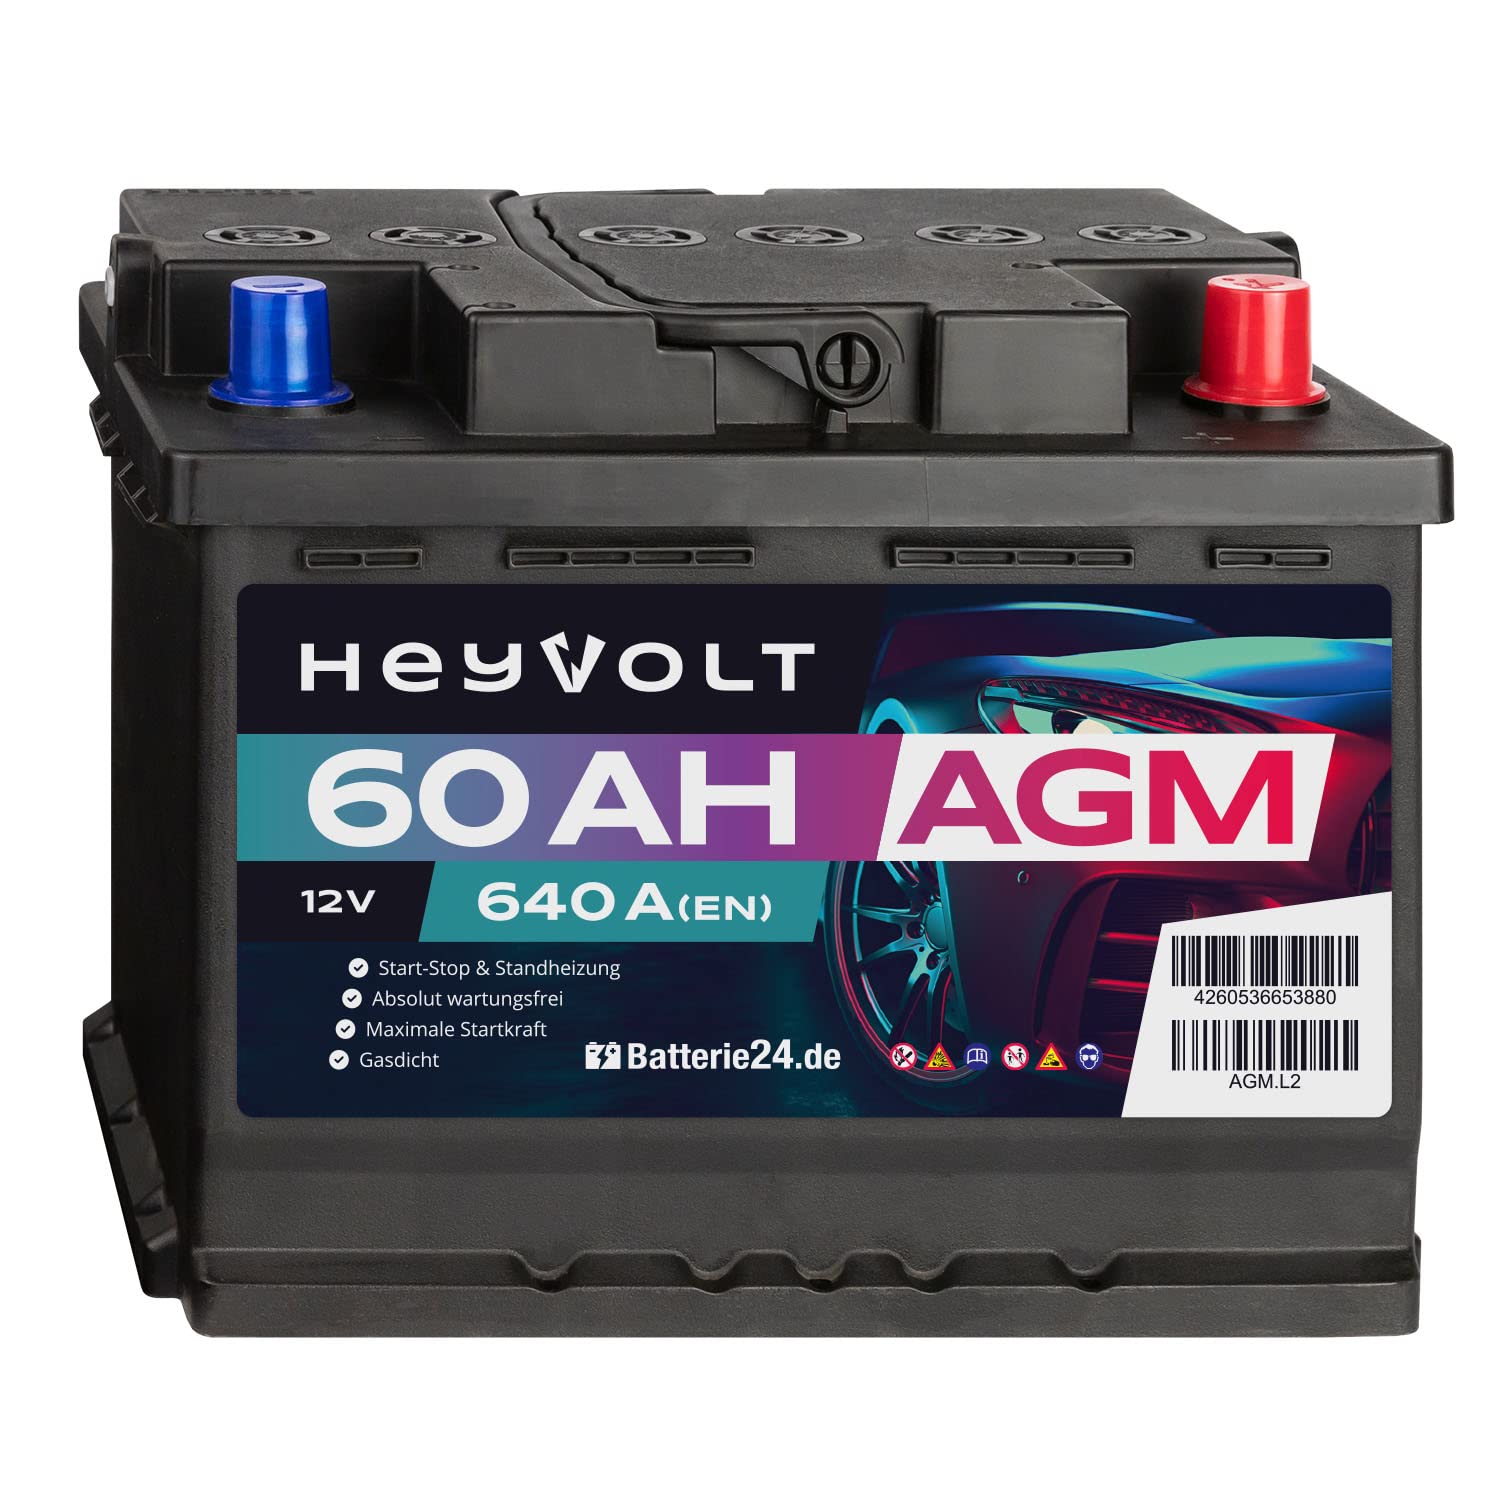 HeyVolt AGM Autobatterie 12V 60Ah 640A/EN Starterbatterie, Start-Stopp & Standheizung geeignet, absolut wartungsfrei von Batterie24.de